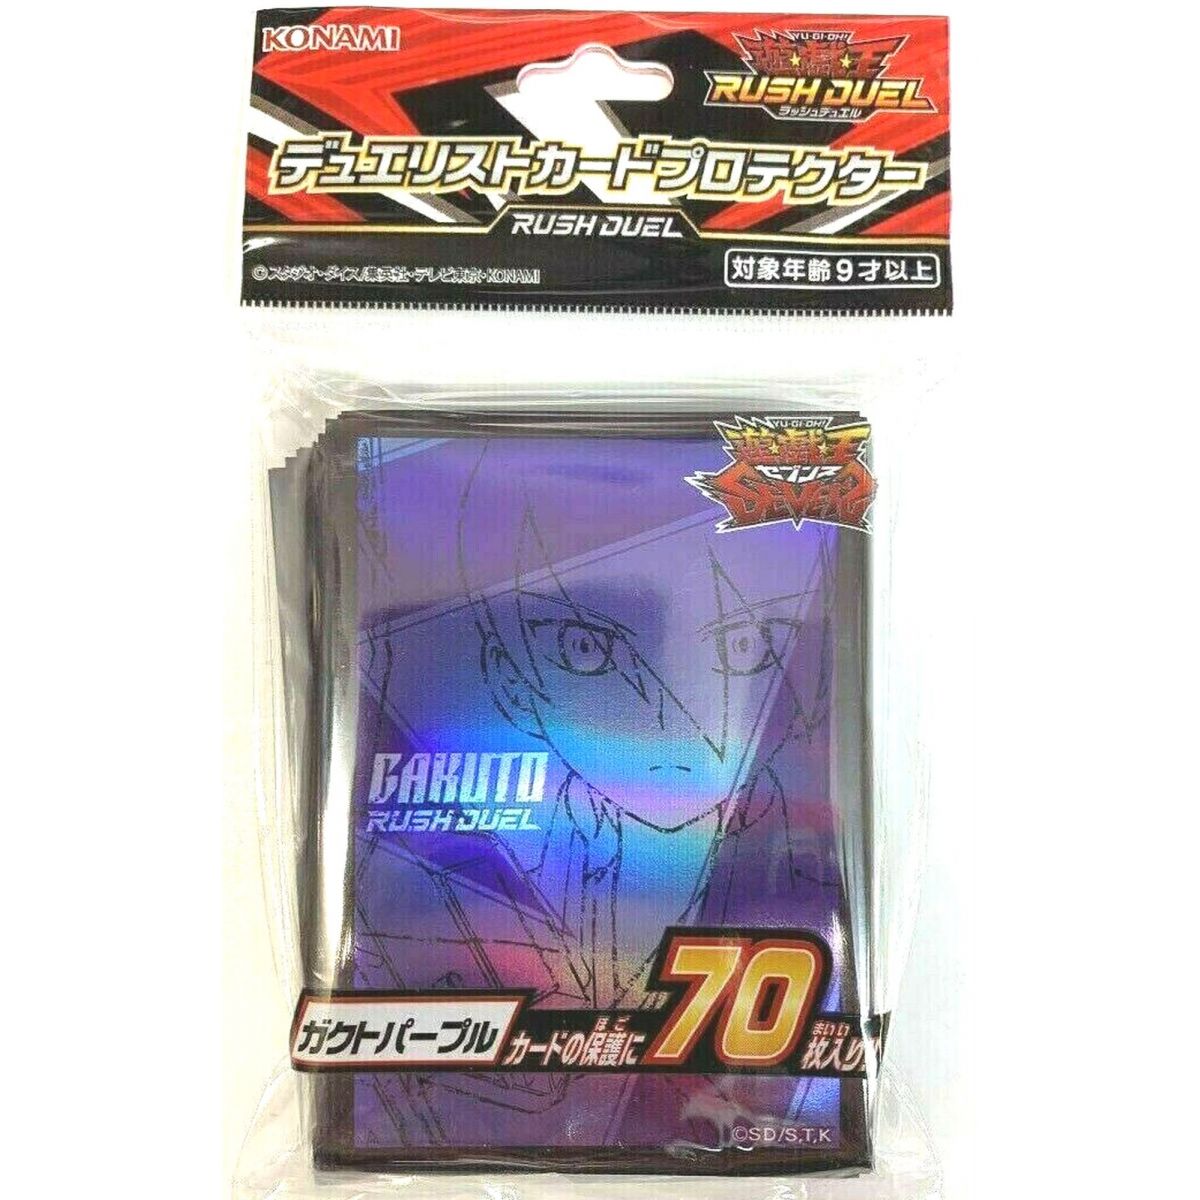 Item Yu-Gi-Oh! - Kartenhüllen – Gakuto Rush Duel (70) – OCG